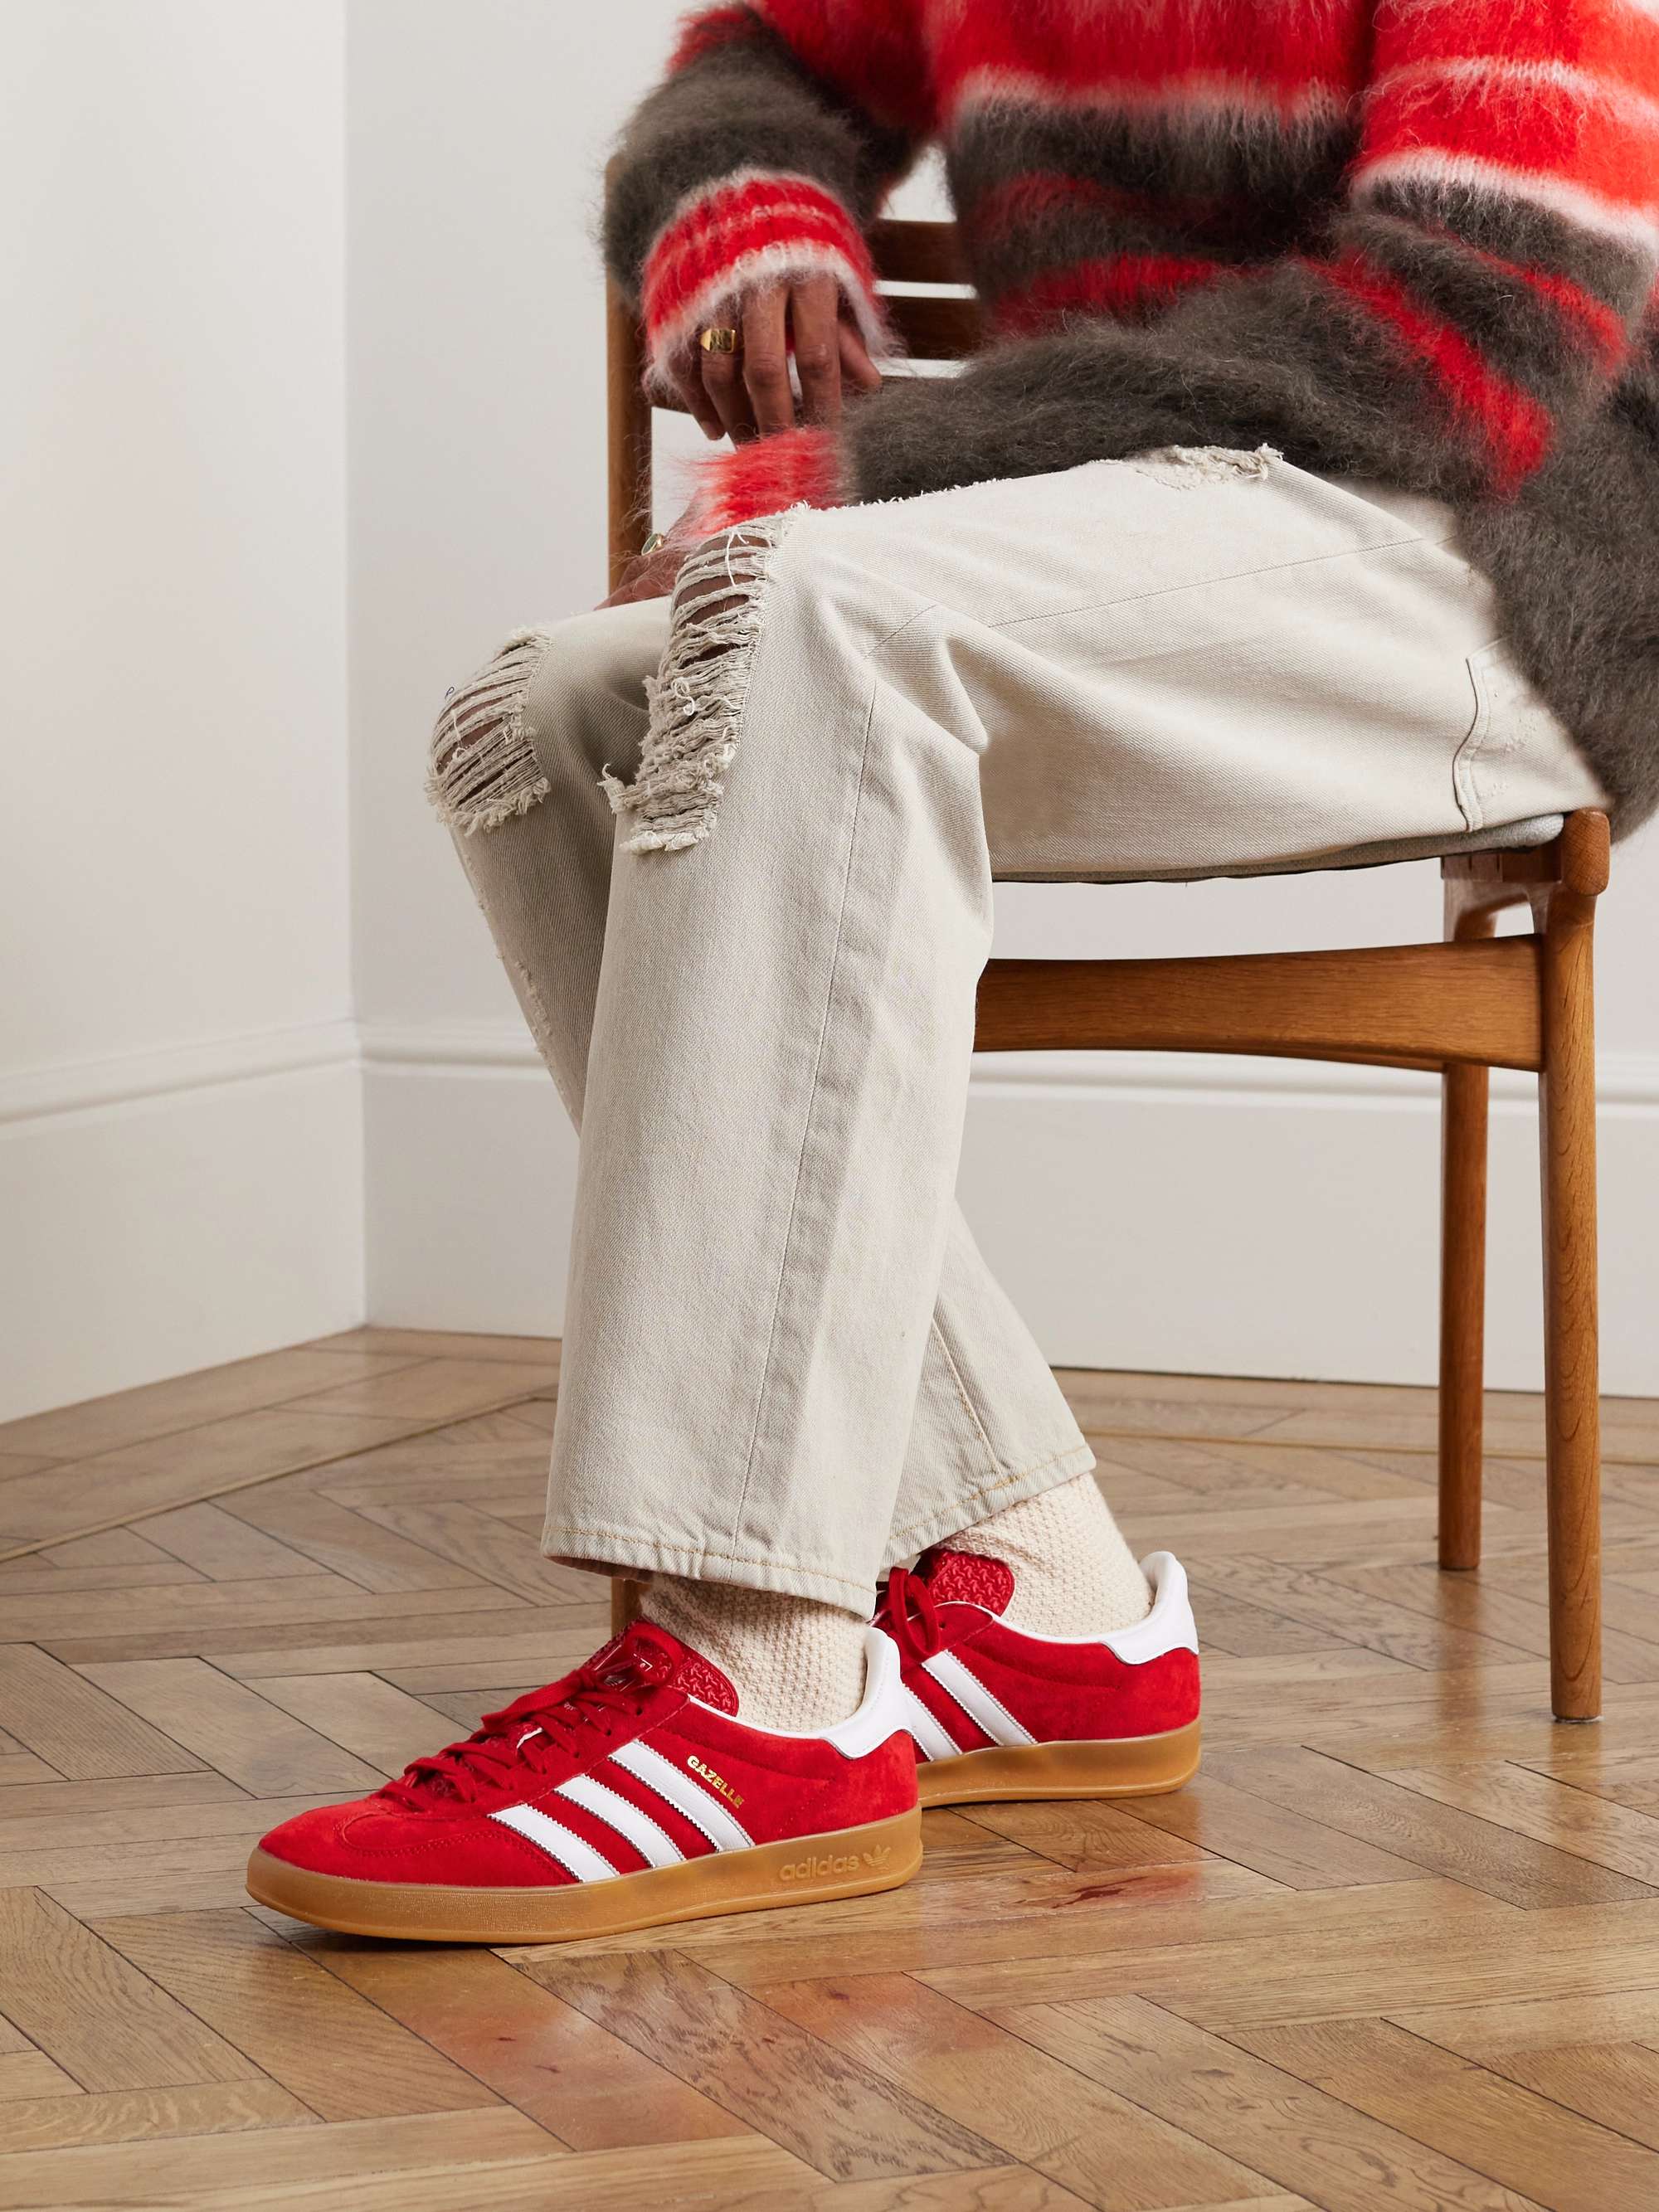 ADIDAS ORIGINALS Gazelle Indoor Leather-Trimmed Suede Sneakers for Men ...